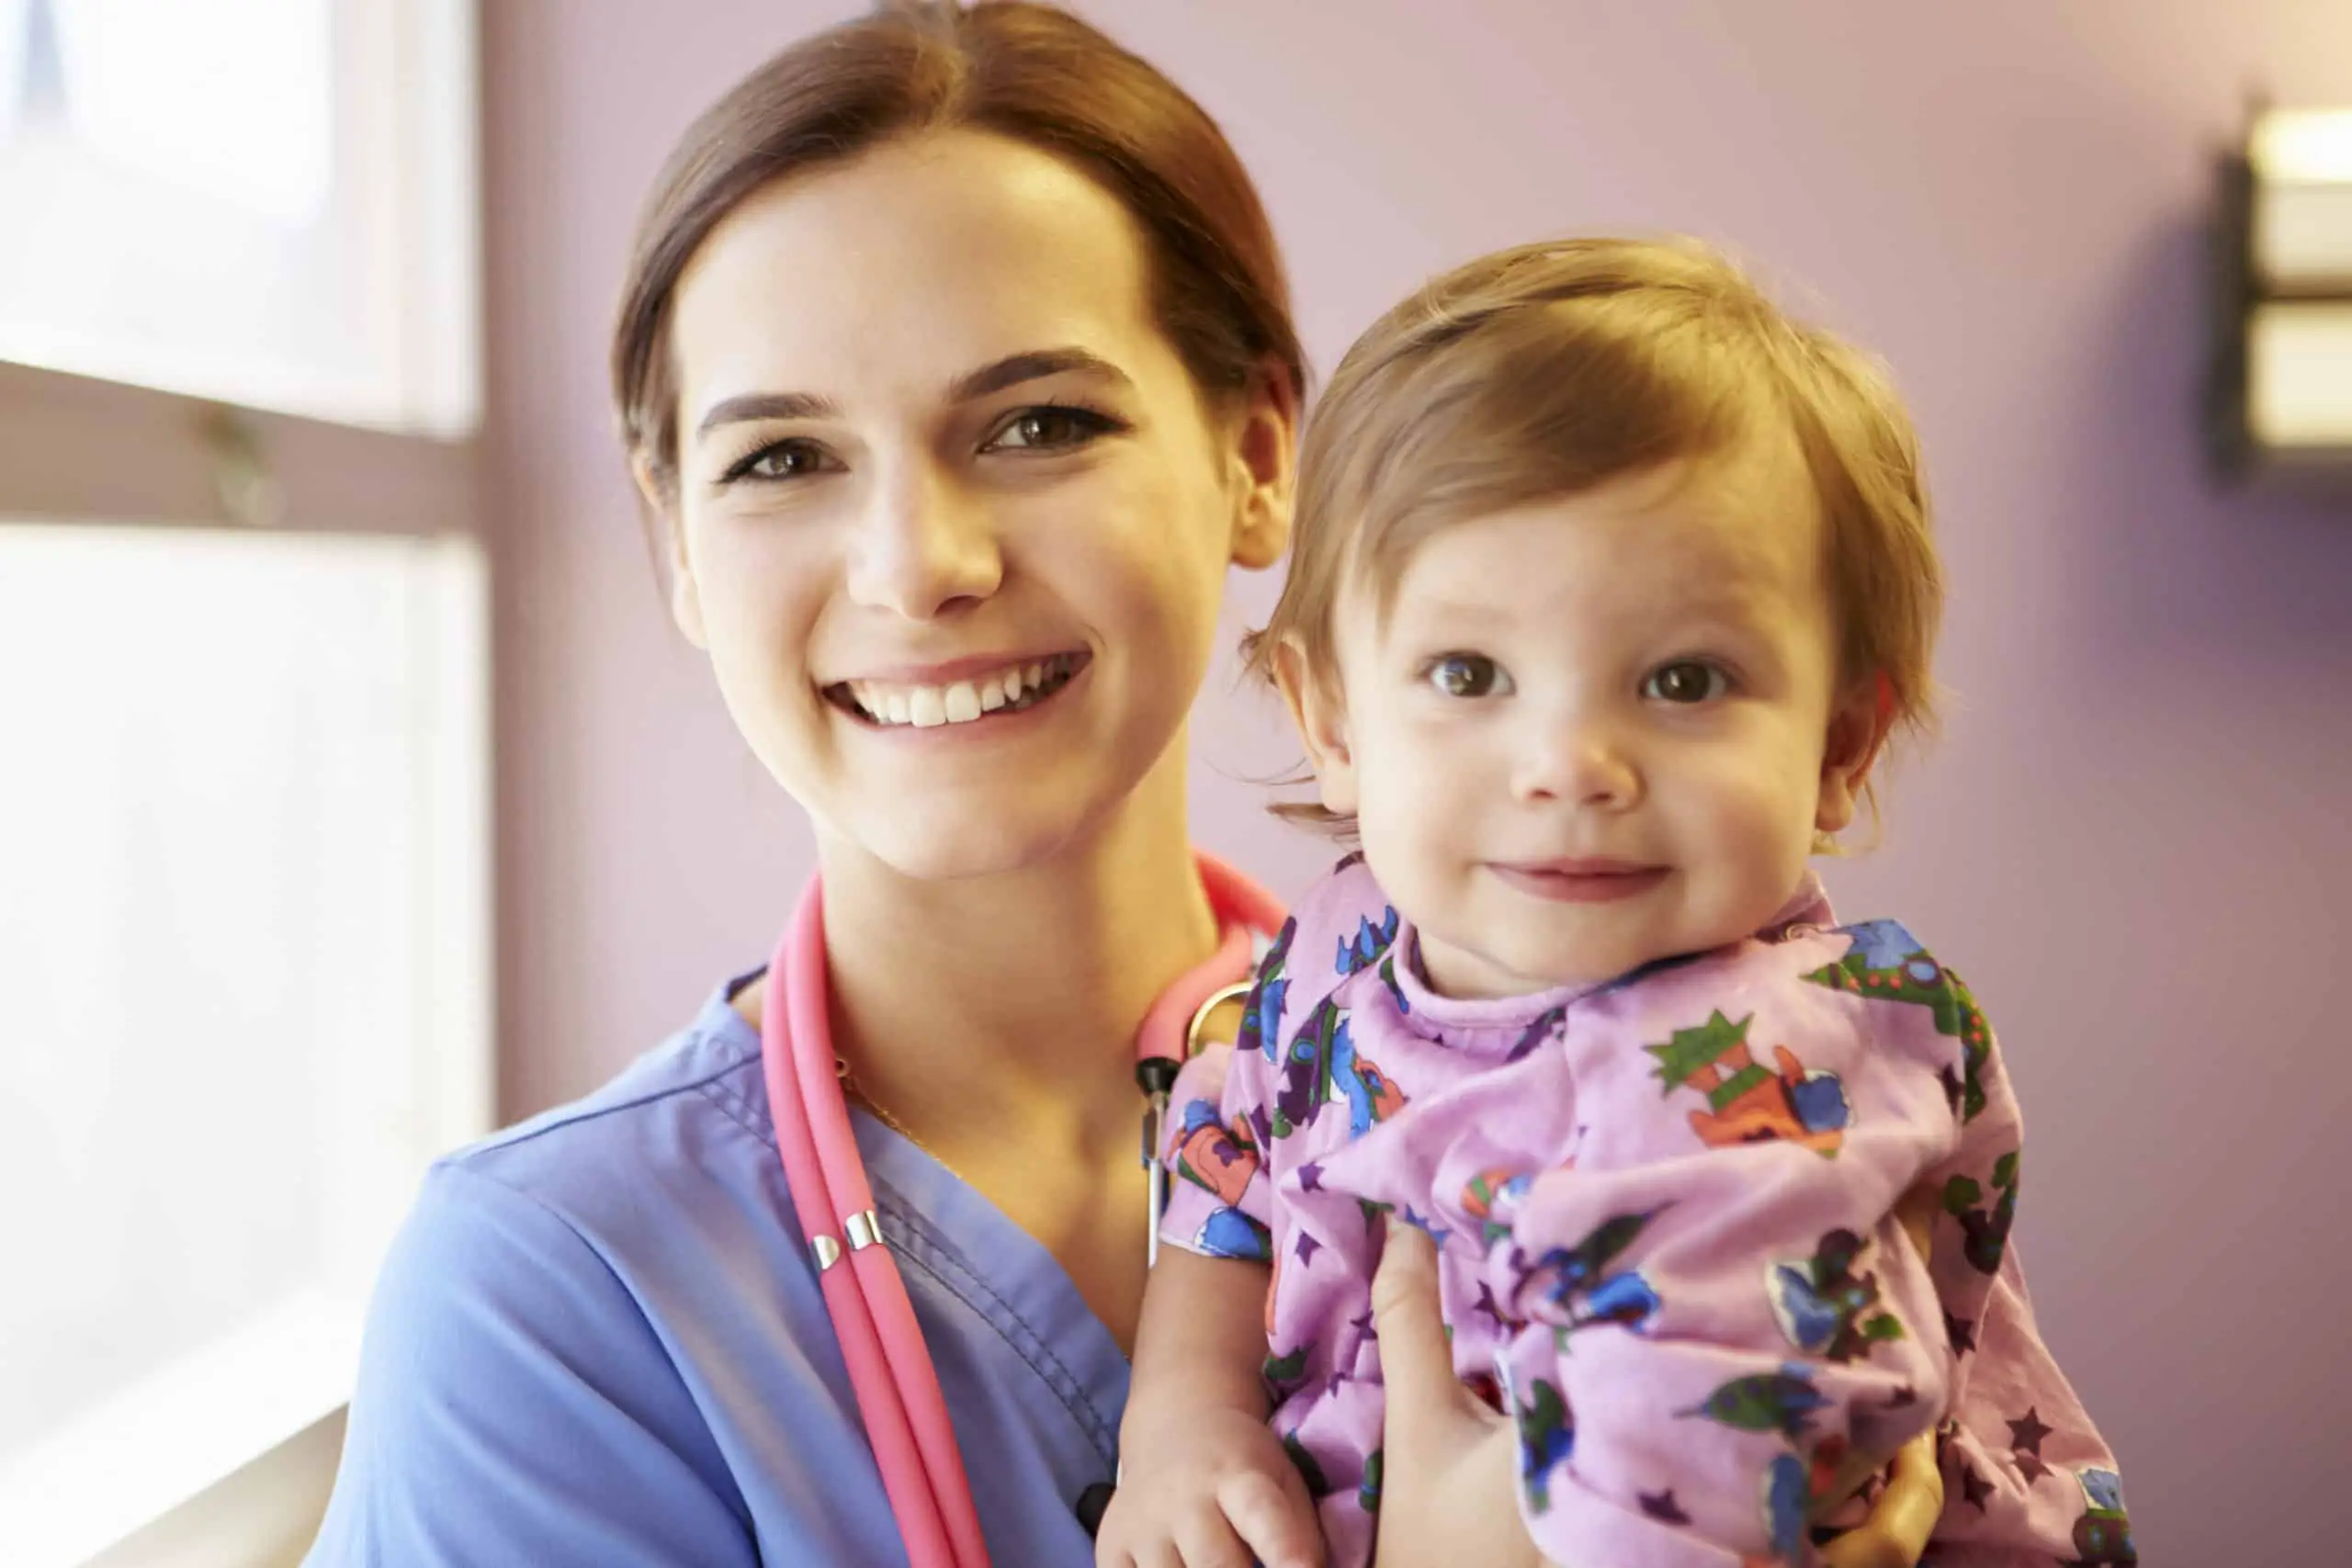 Pediatric cna jobs in maryland